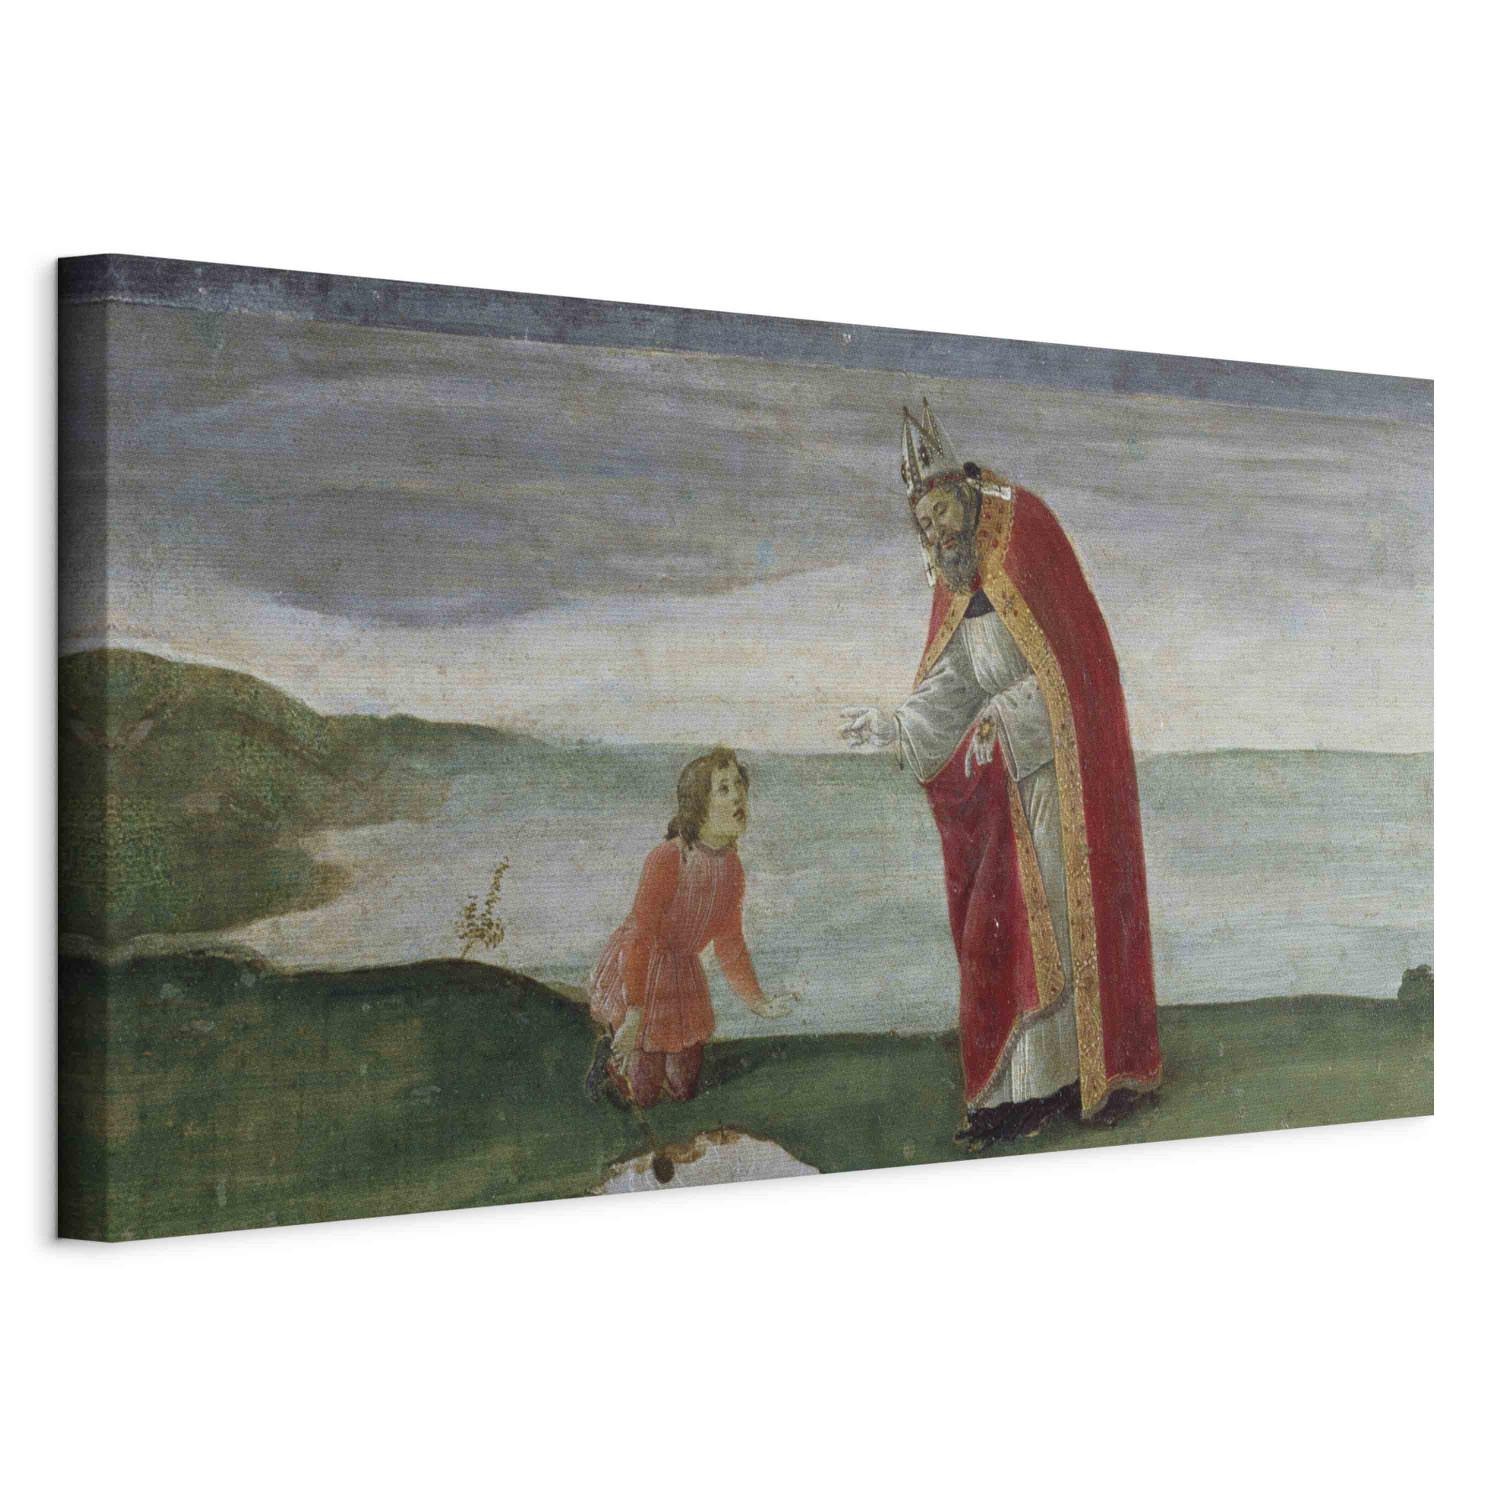 Reproducción Saint Augustinus and the boy on the beach